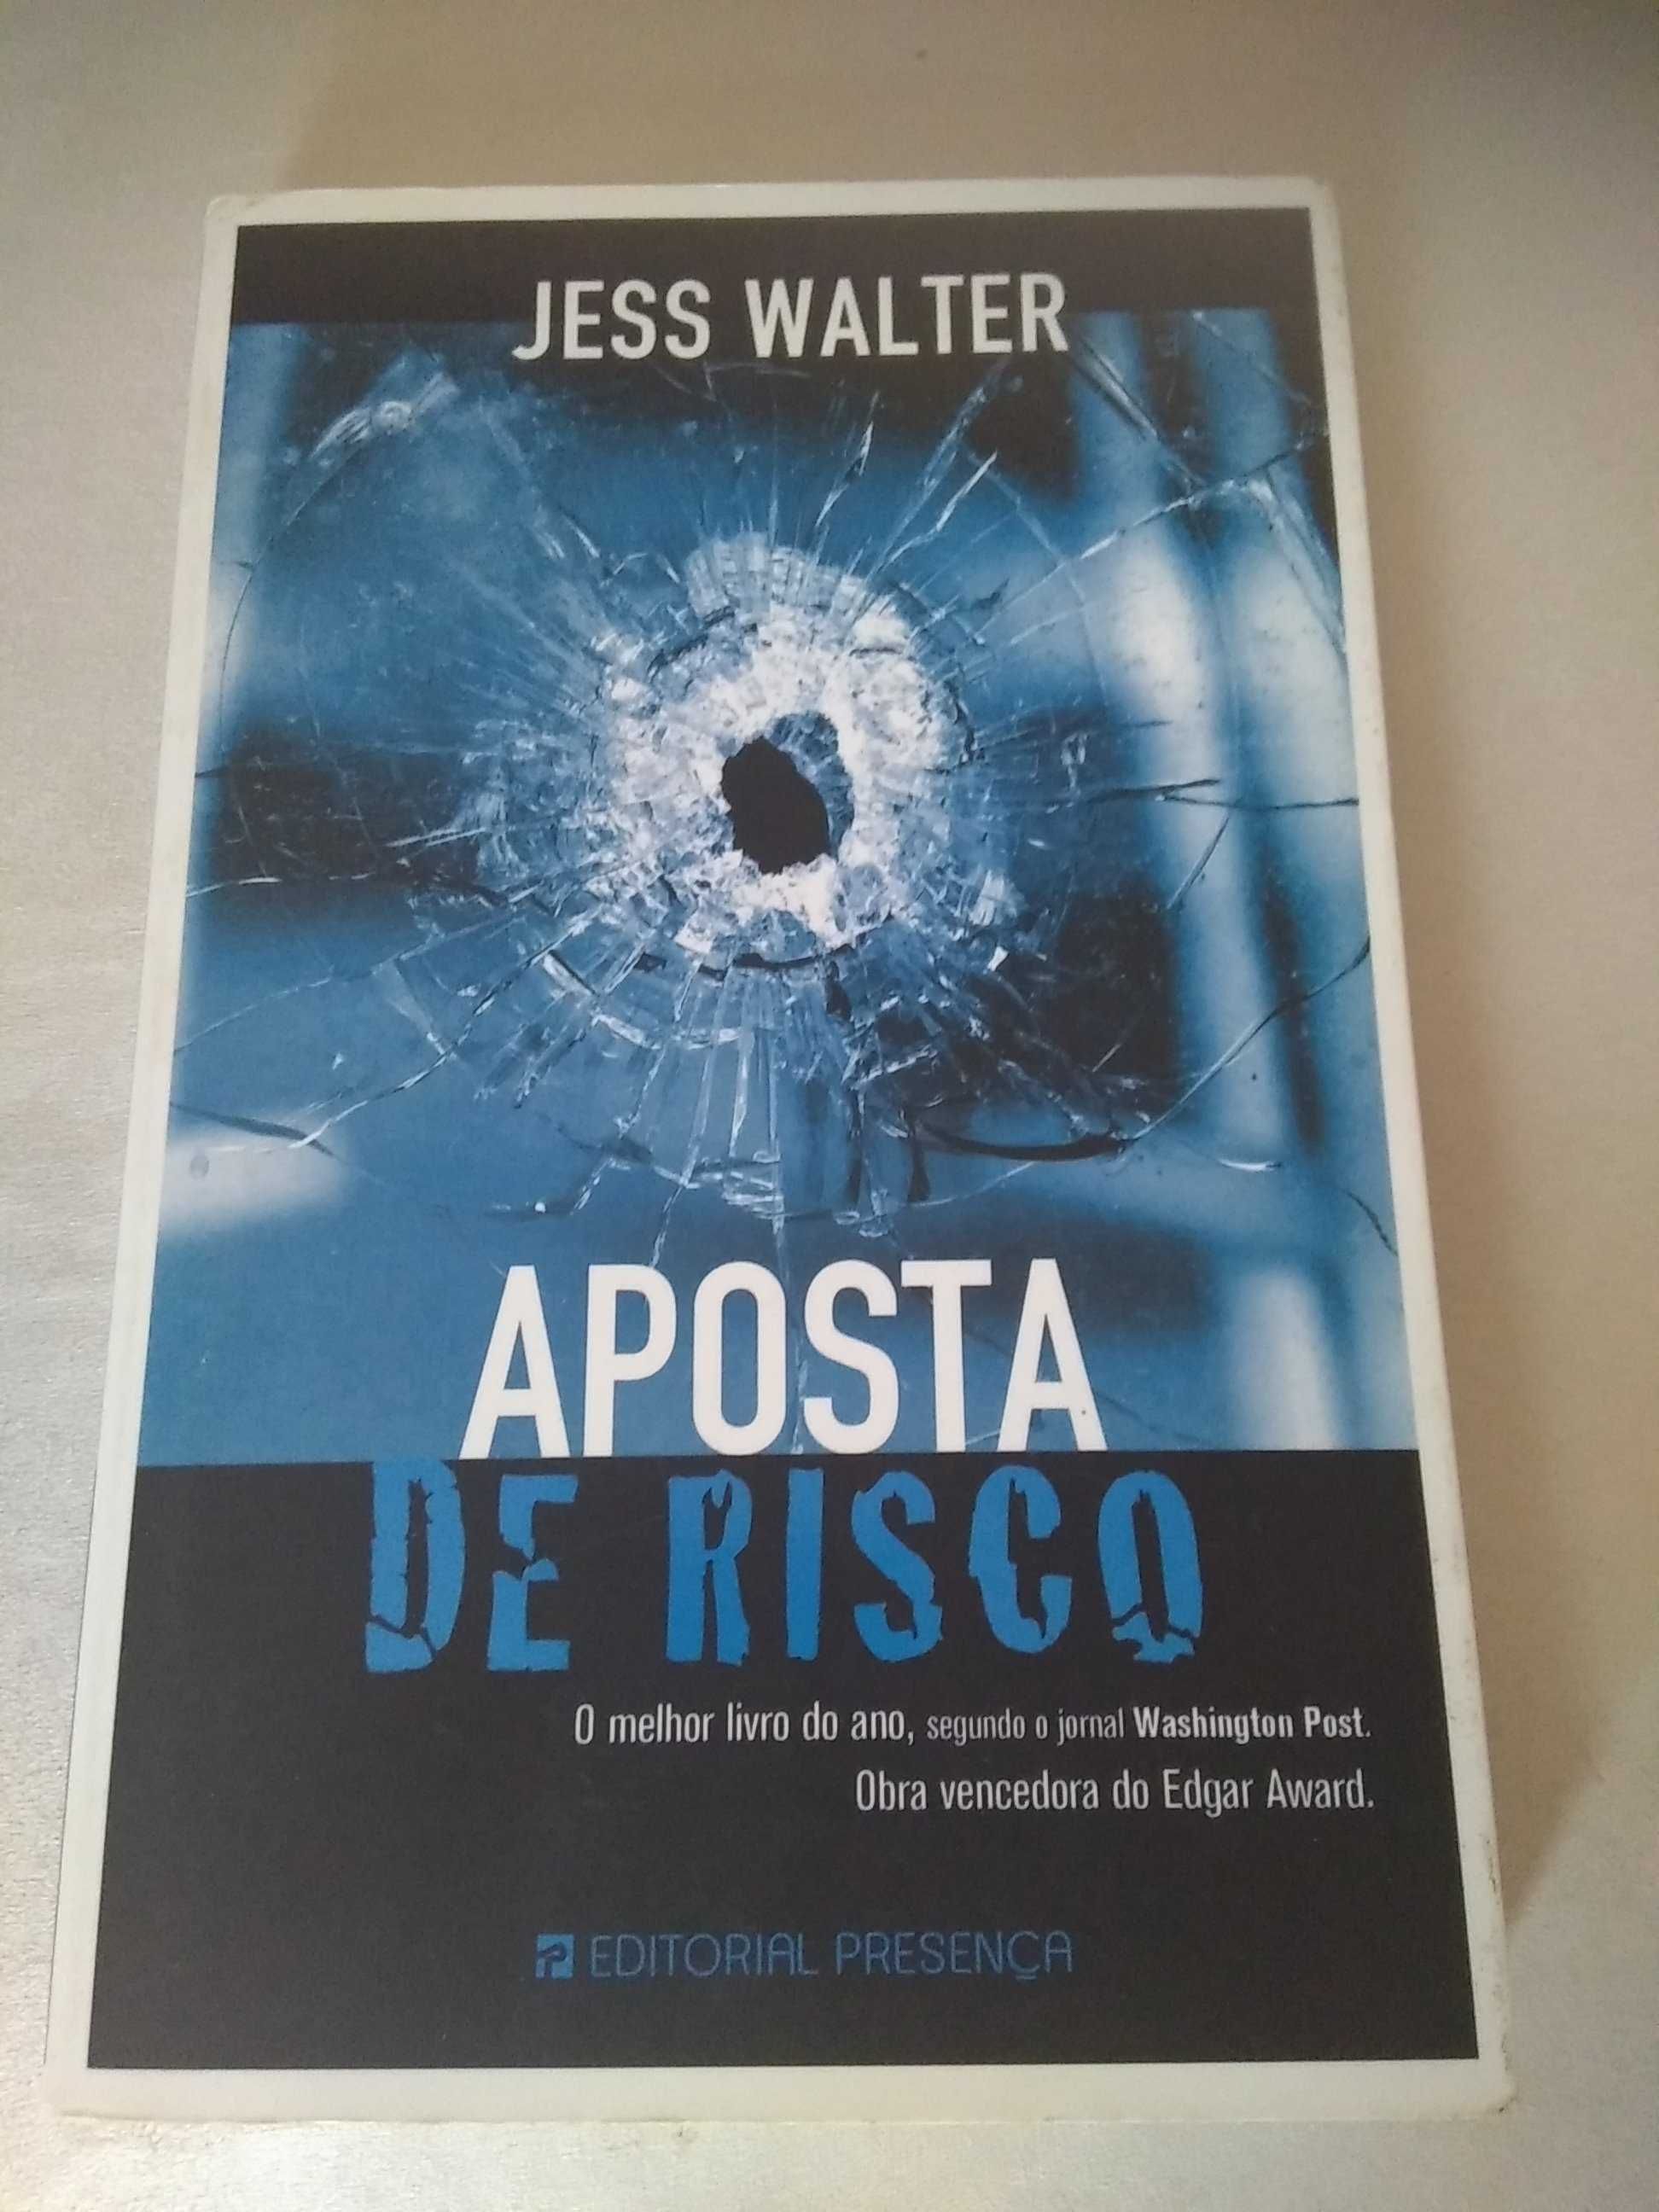 Jess Walter - Aposta de risco